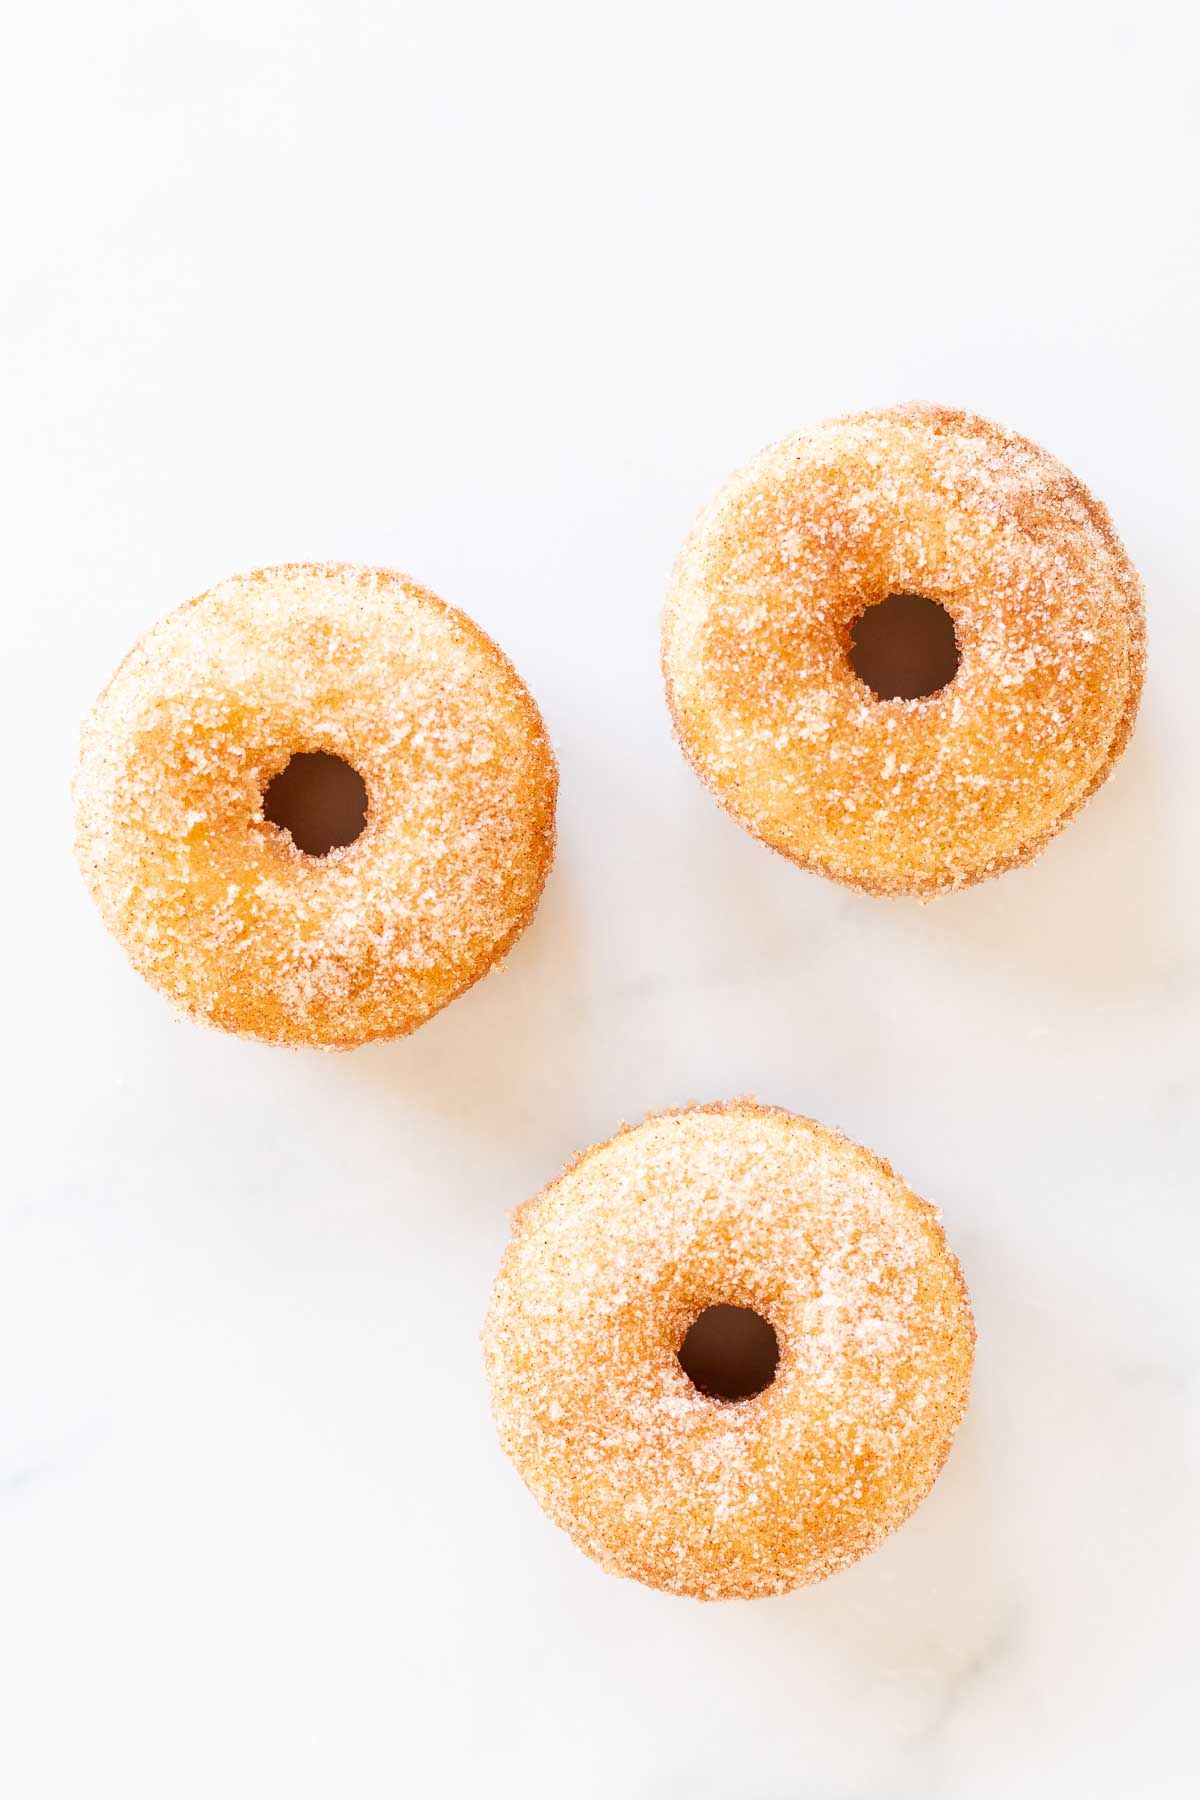 Cinnamon sugar donuts on a marble countertop.